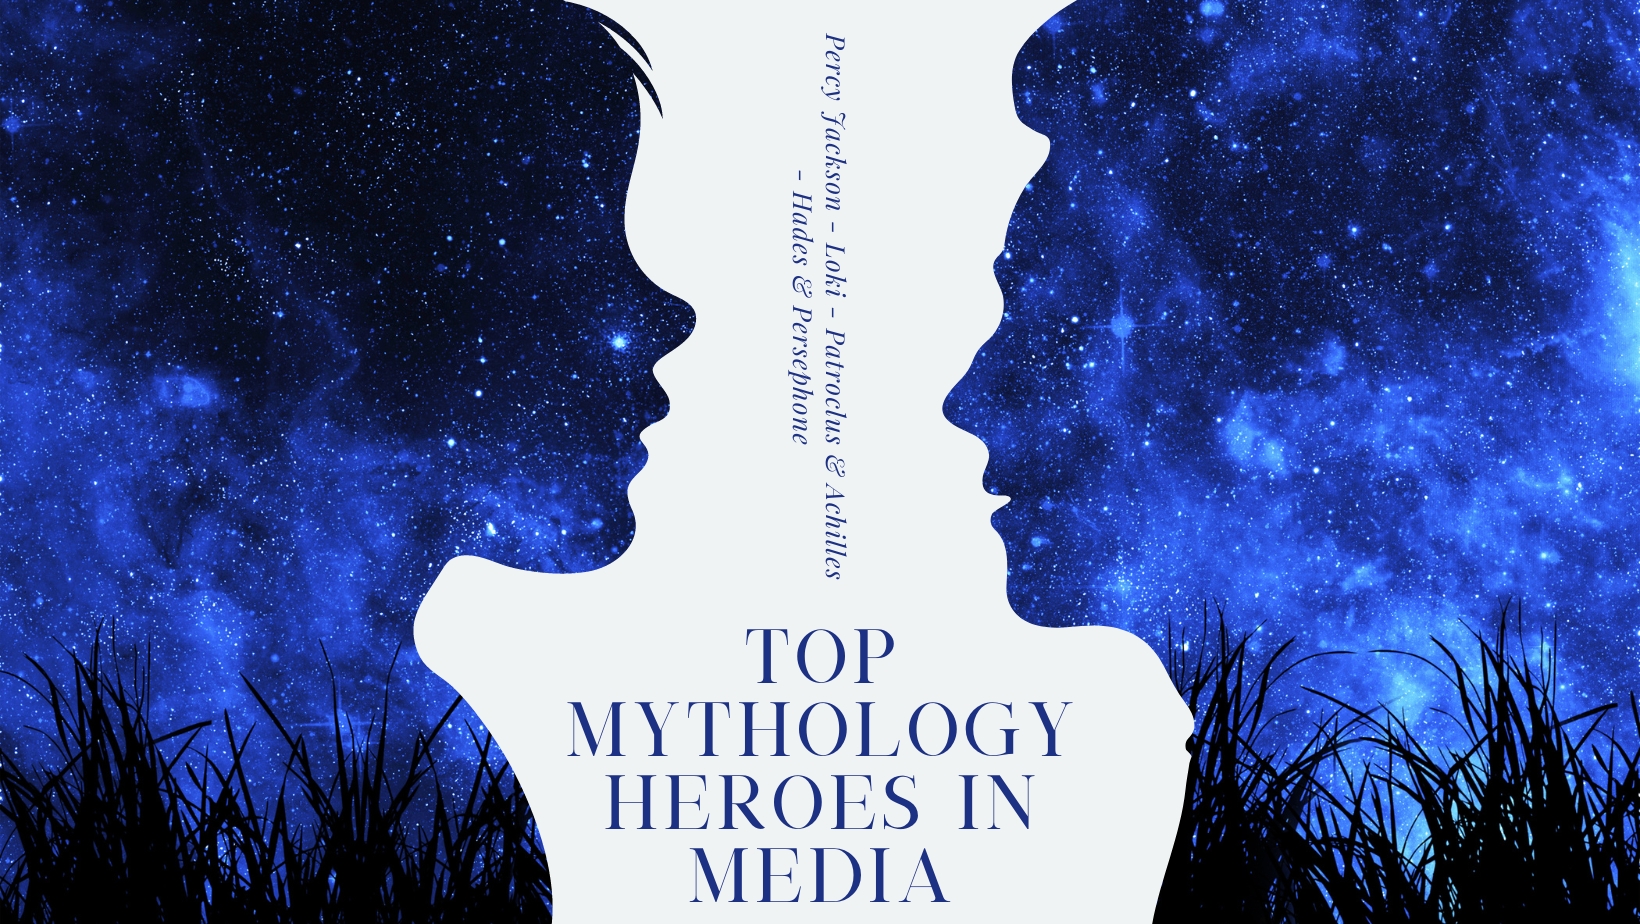 Top mythology heroes in media